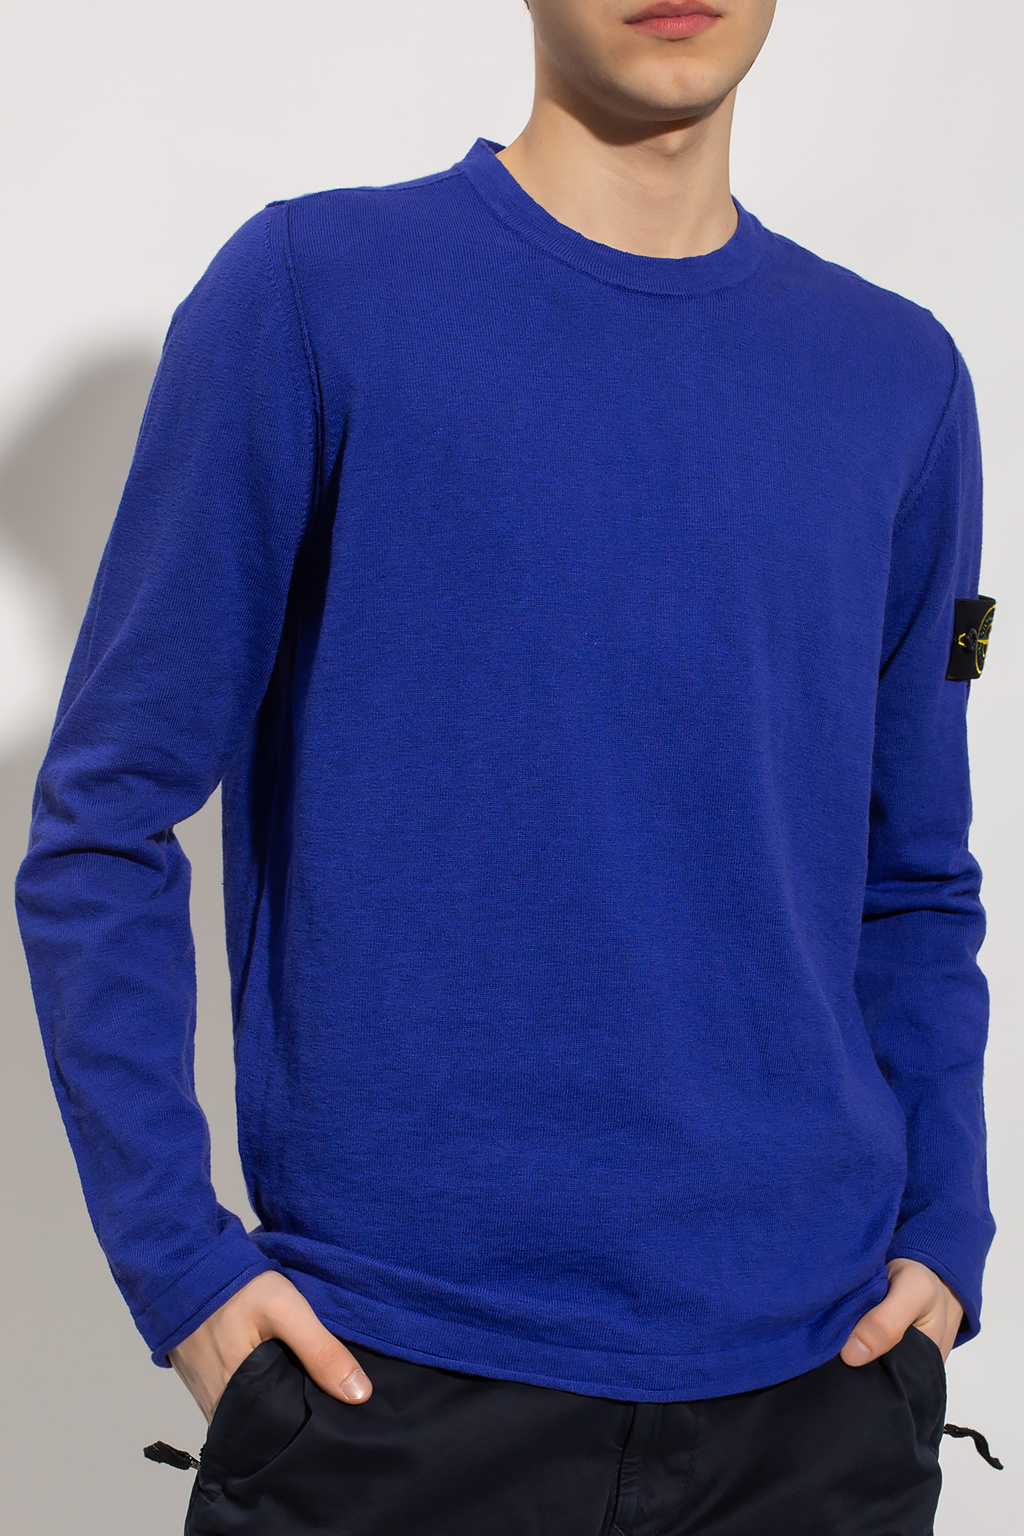 klink Krachtcel Drama Stone Island Sweater with logo | Men's Clothing | Vitkac